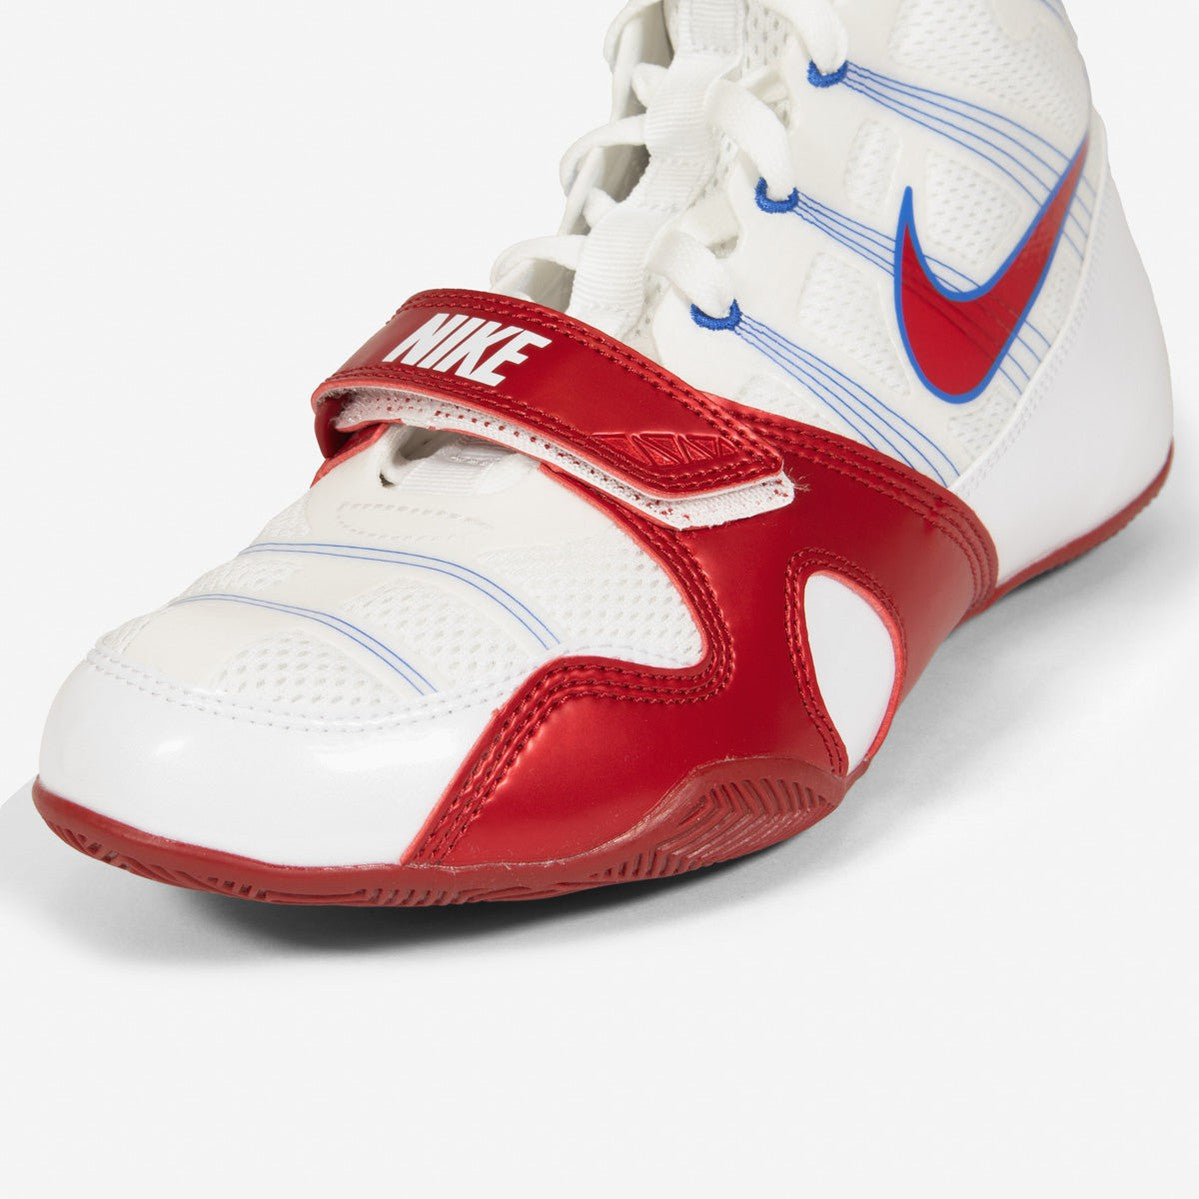 Boxschuhe Nike Hyperko Weiß-Rot